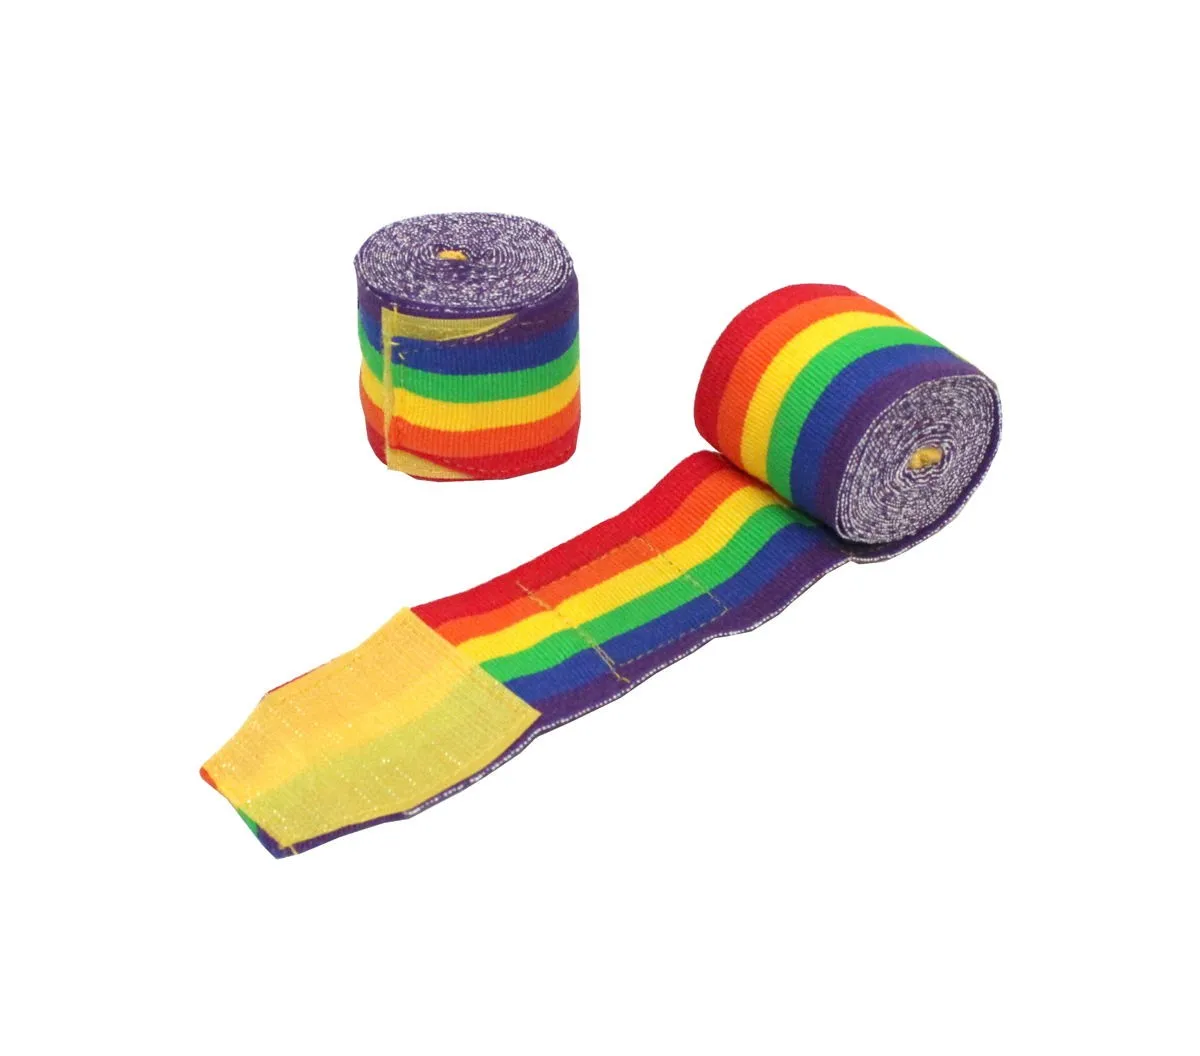 Rainbow elasticated boxing bandages for boxing gloves